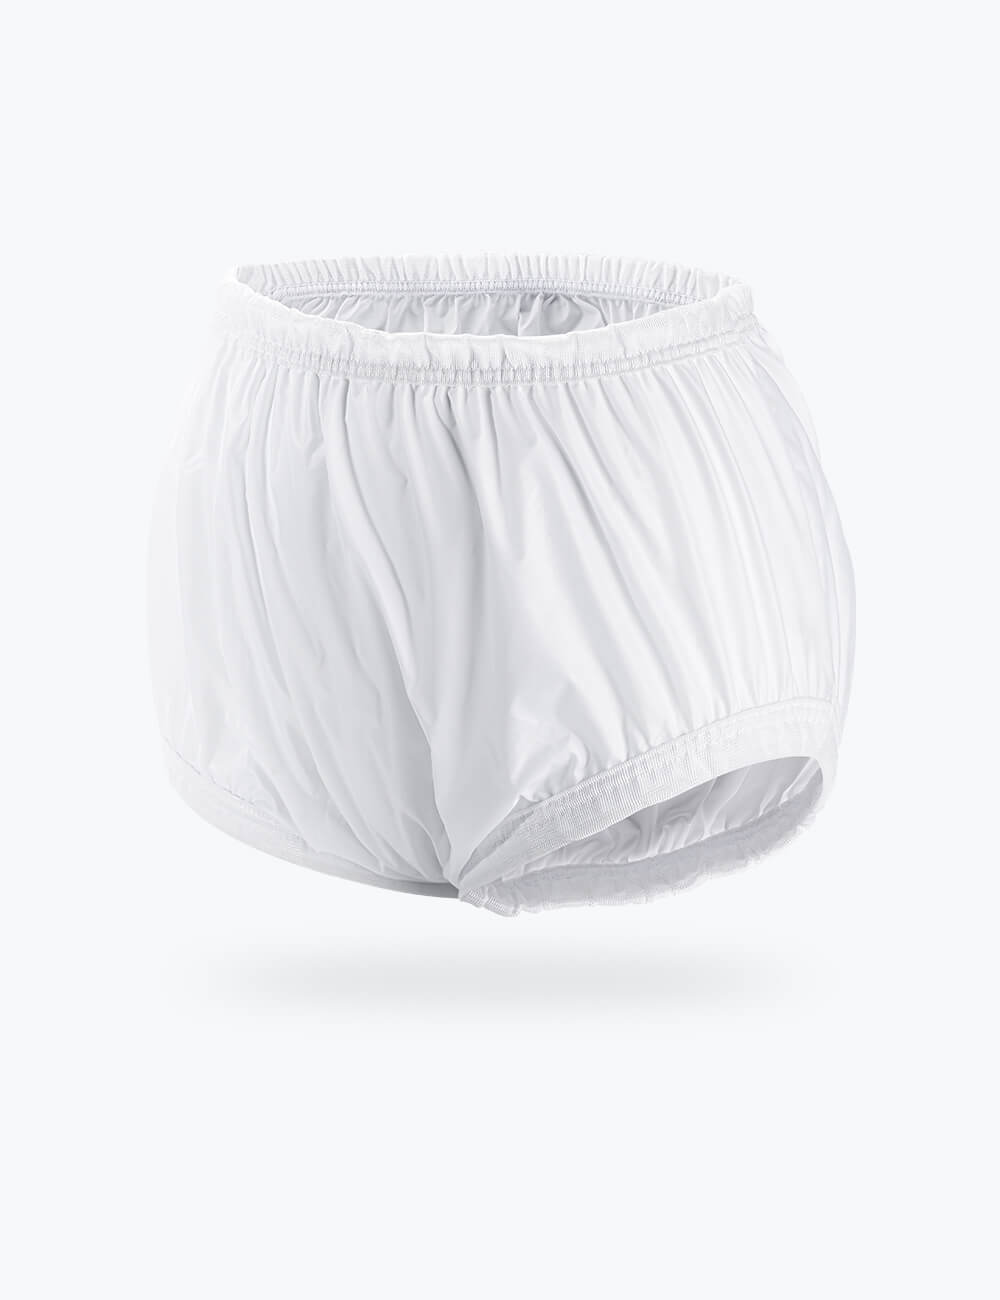 Plastic Pants Adult Incontinence